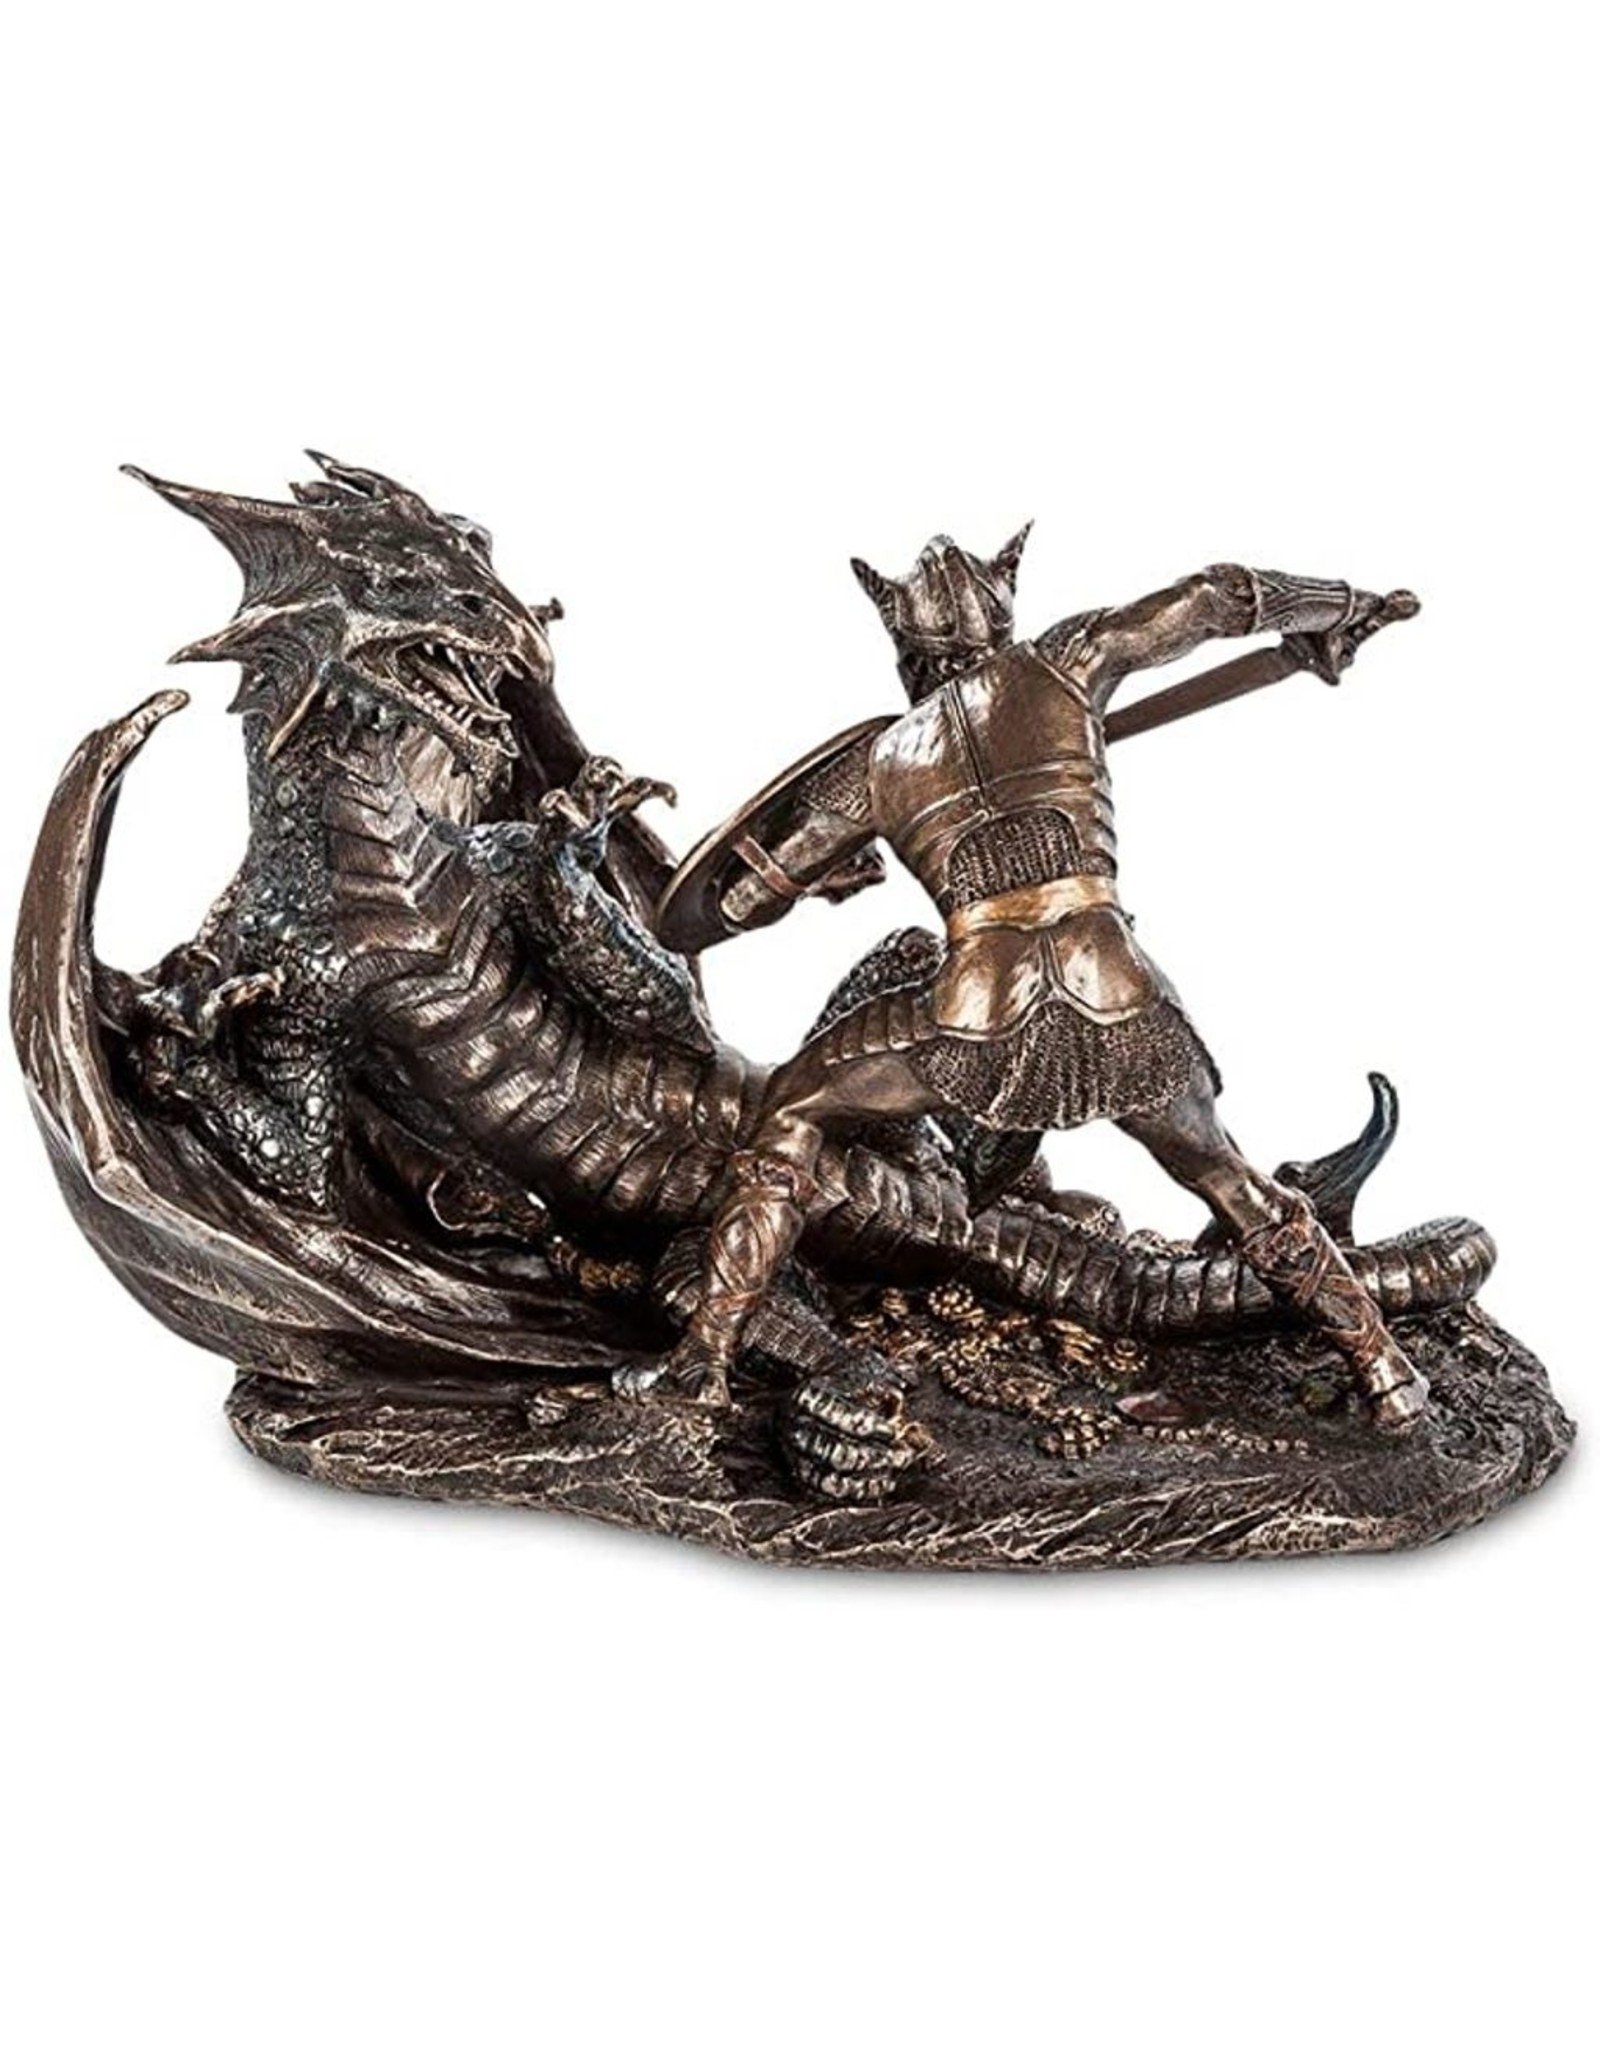 Veronese Design Giftware & Lifestyle - Siegfried the Dragon Slayer Statue Veronese Design